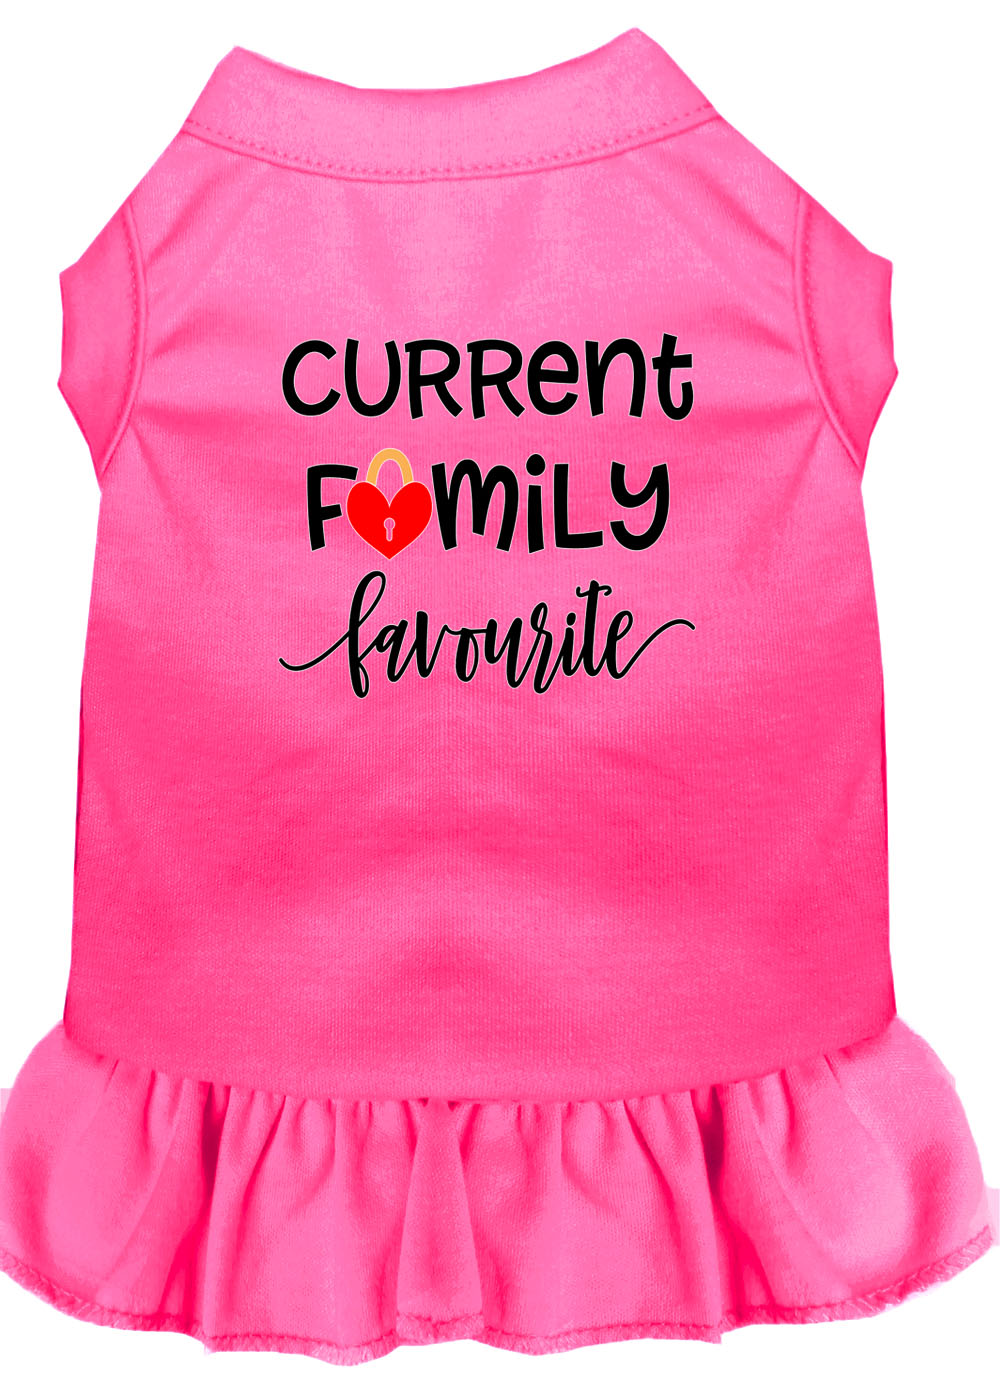 Family Favorite Screen Print Dog Dress Bright Pink XXXL